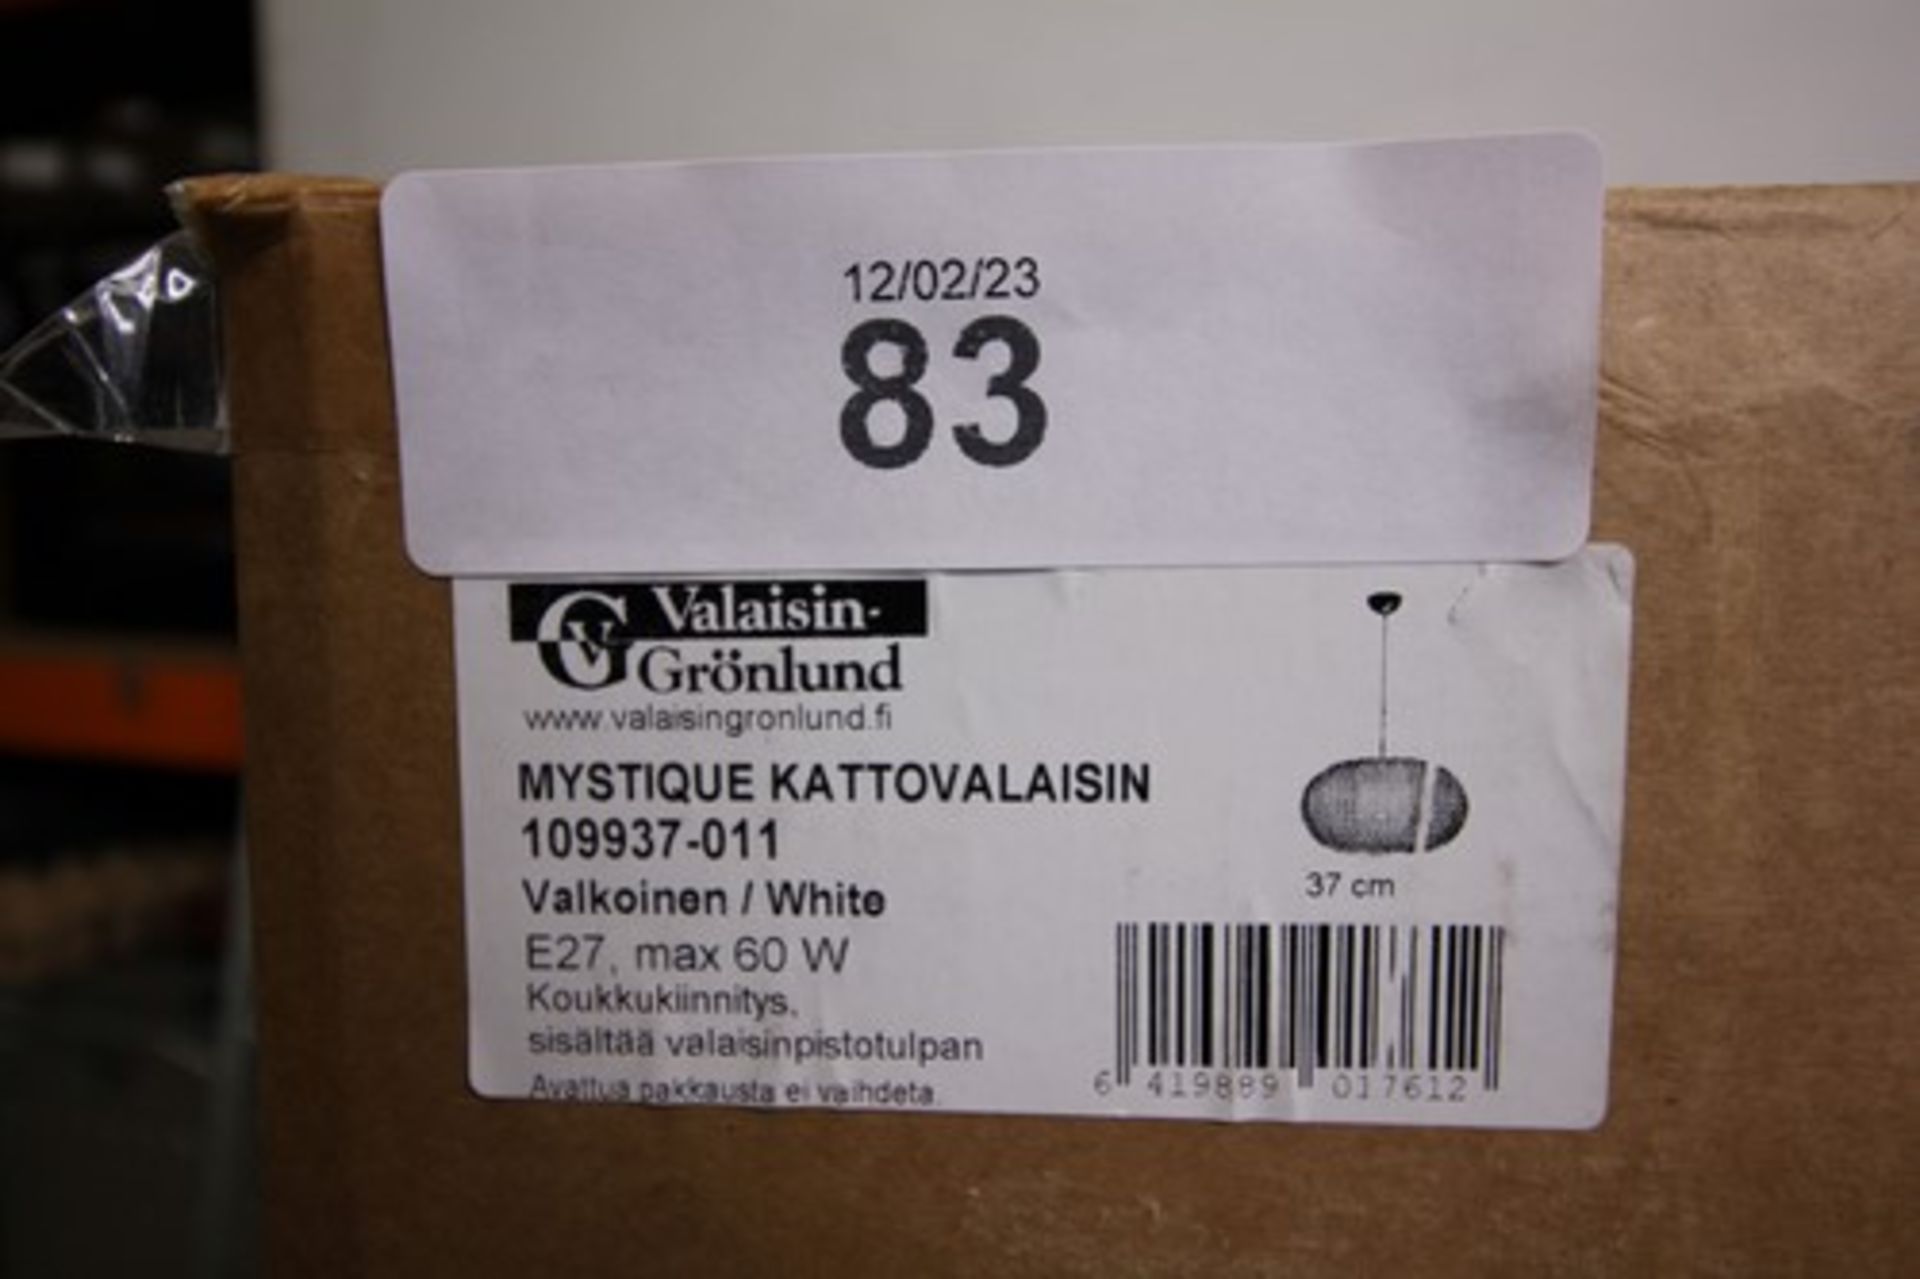 1 x Valaisin Grunland Mystique Kattovalaisin 37cm pendant light, model 109937-011 and 1 x Verona - Image 6 of 7